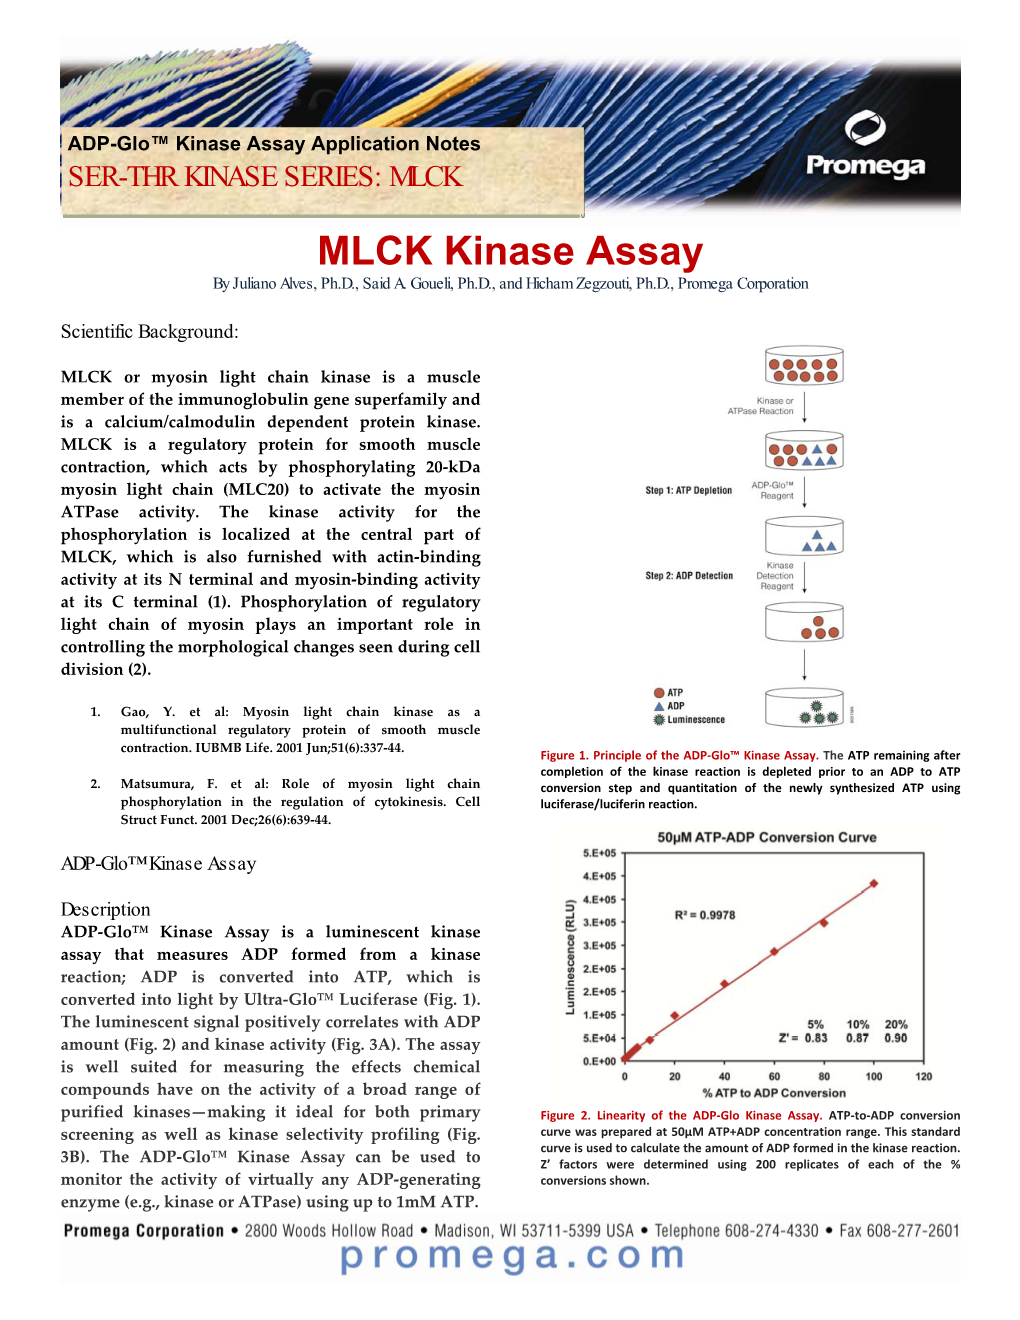 MLCK Kinase Assay by Juliano Alves, Ph.D., Said A